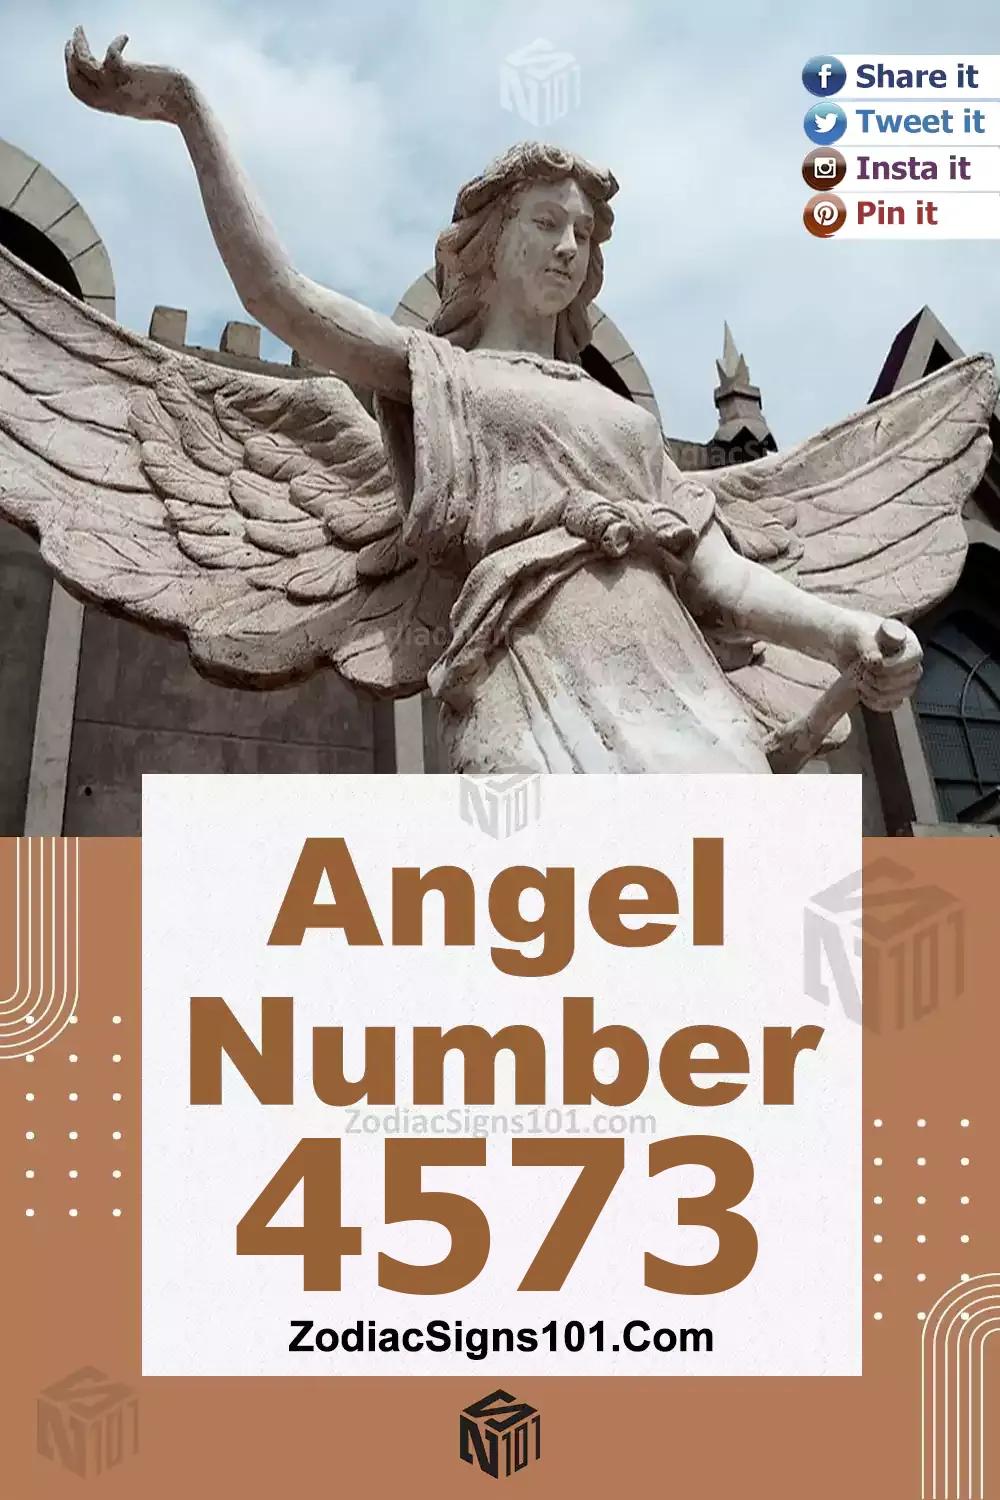 4573-Angel-Number-Meaning.jpg